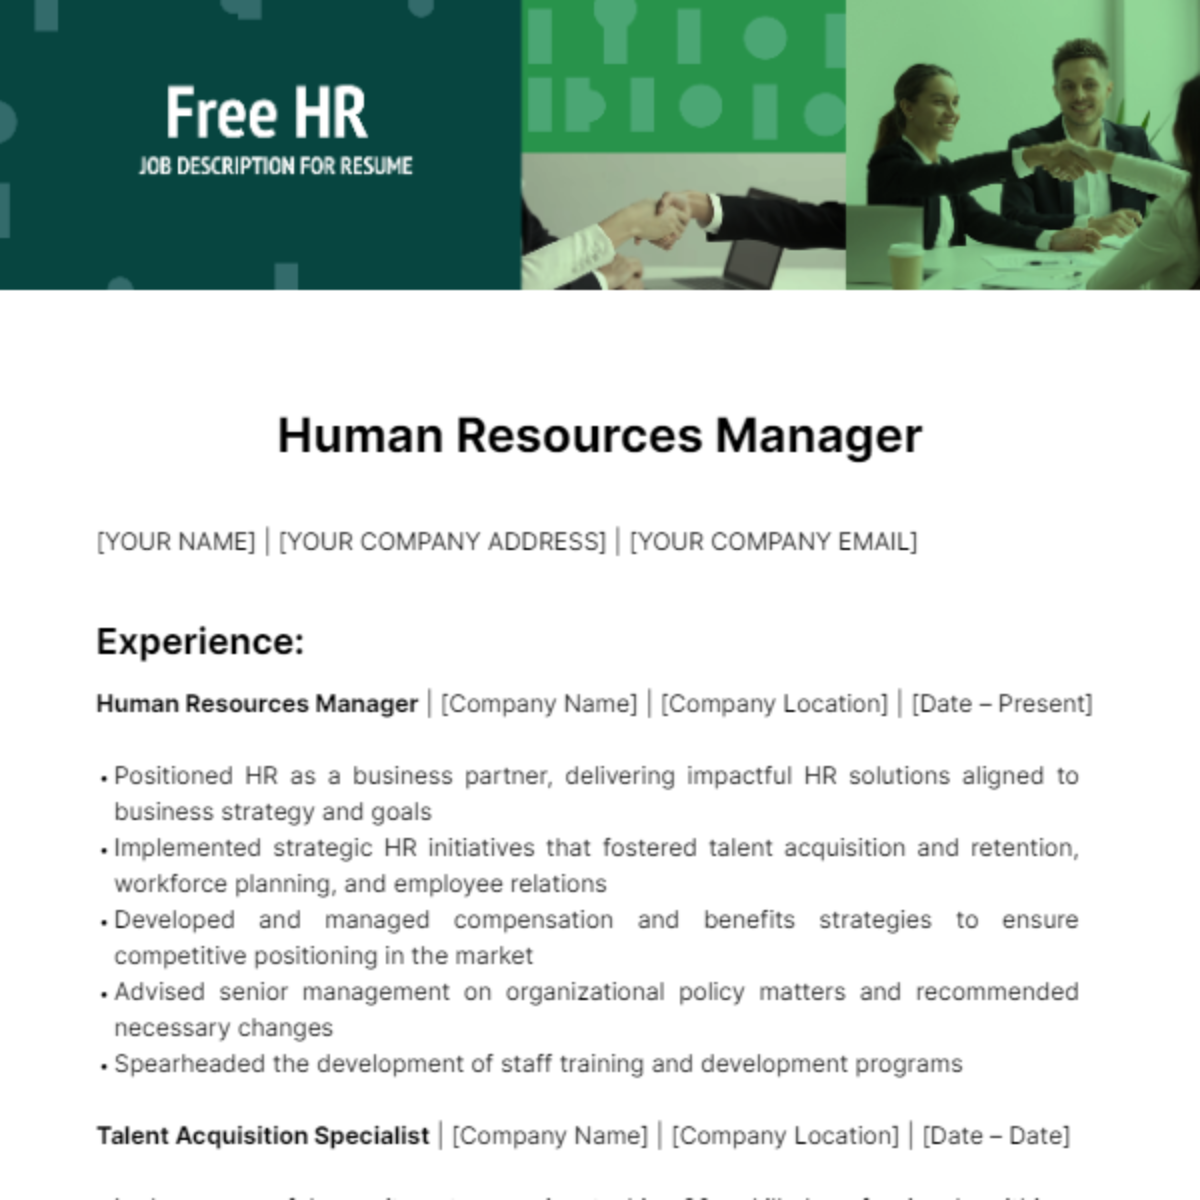 HR Job Description for Resume Template